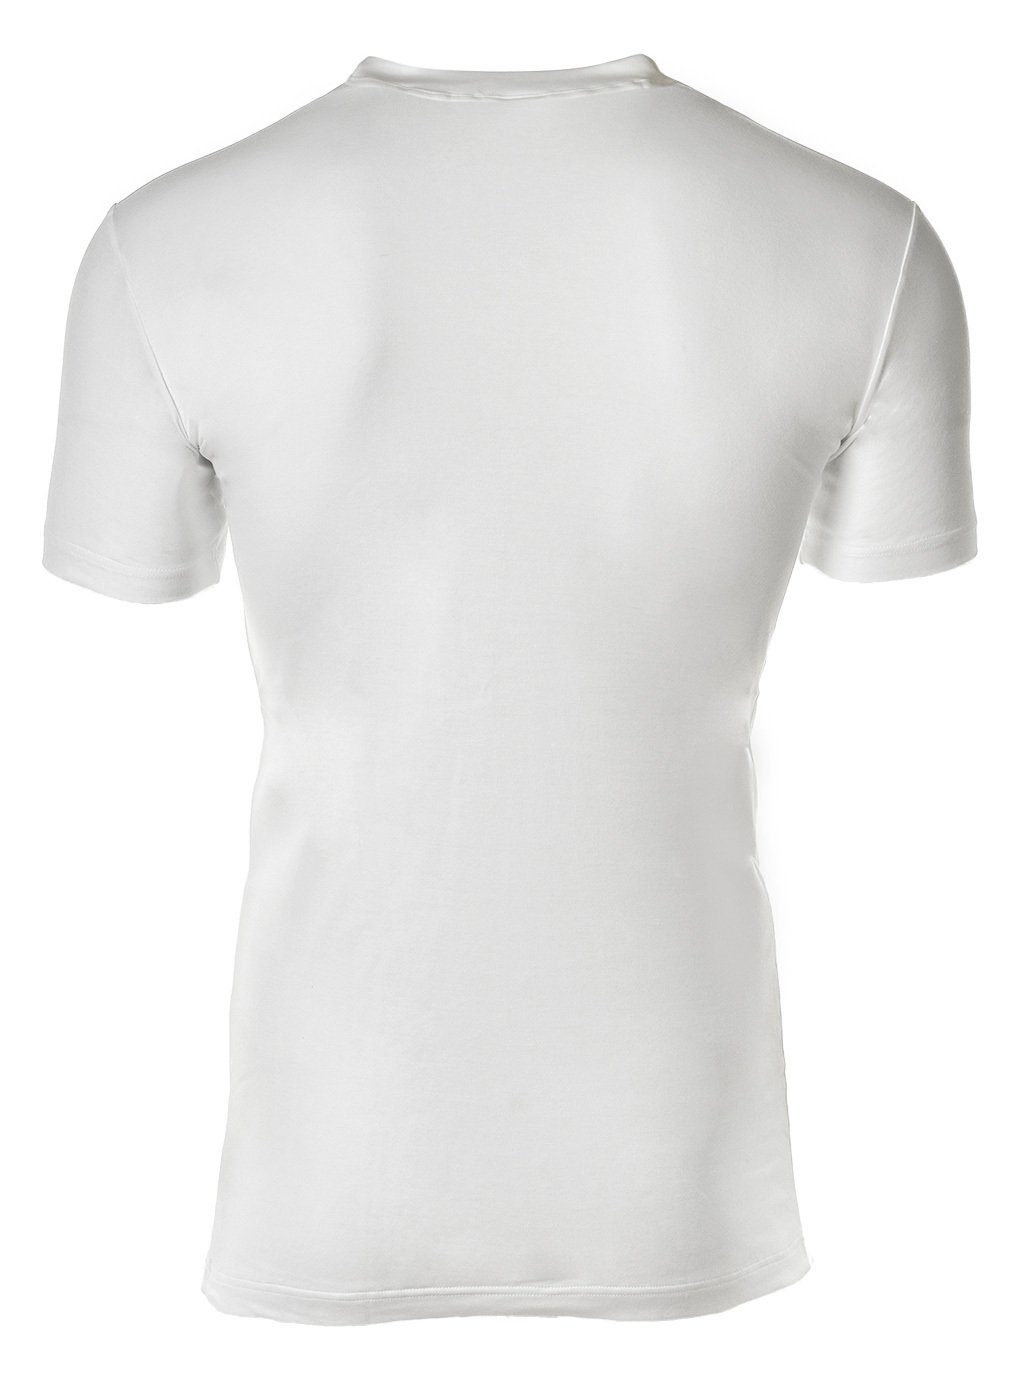 Novila T-Shirt Herren American-Shirt - Rundhals, Natural Weiß Comfort